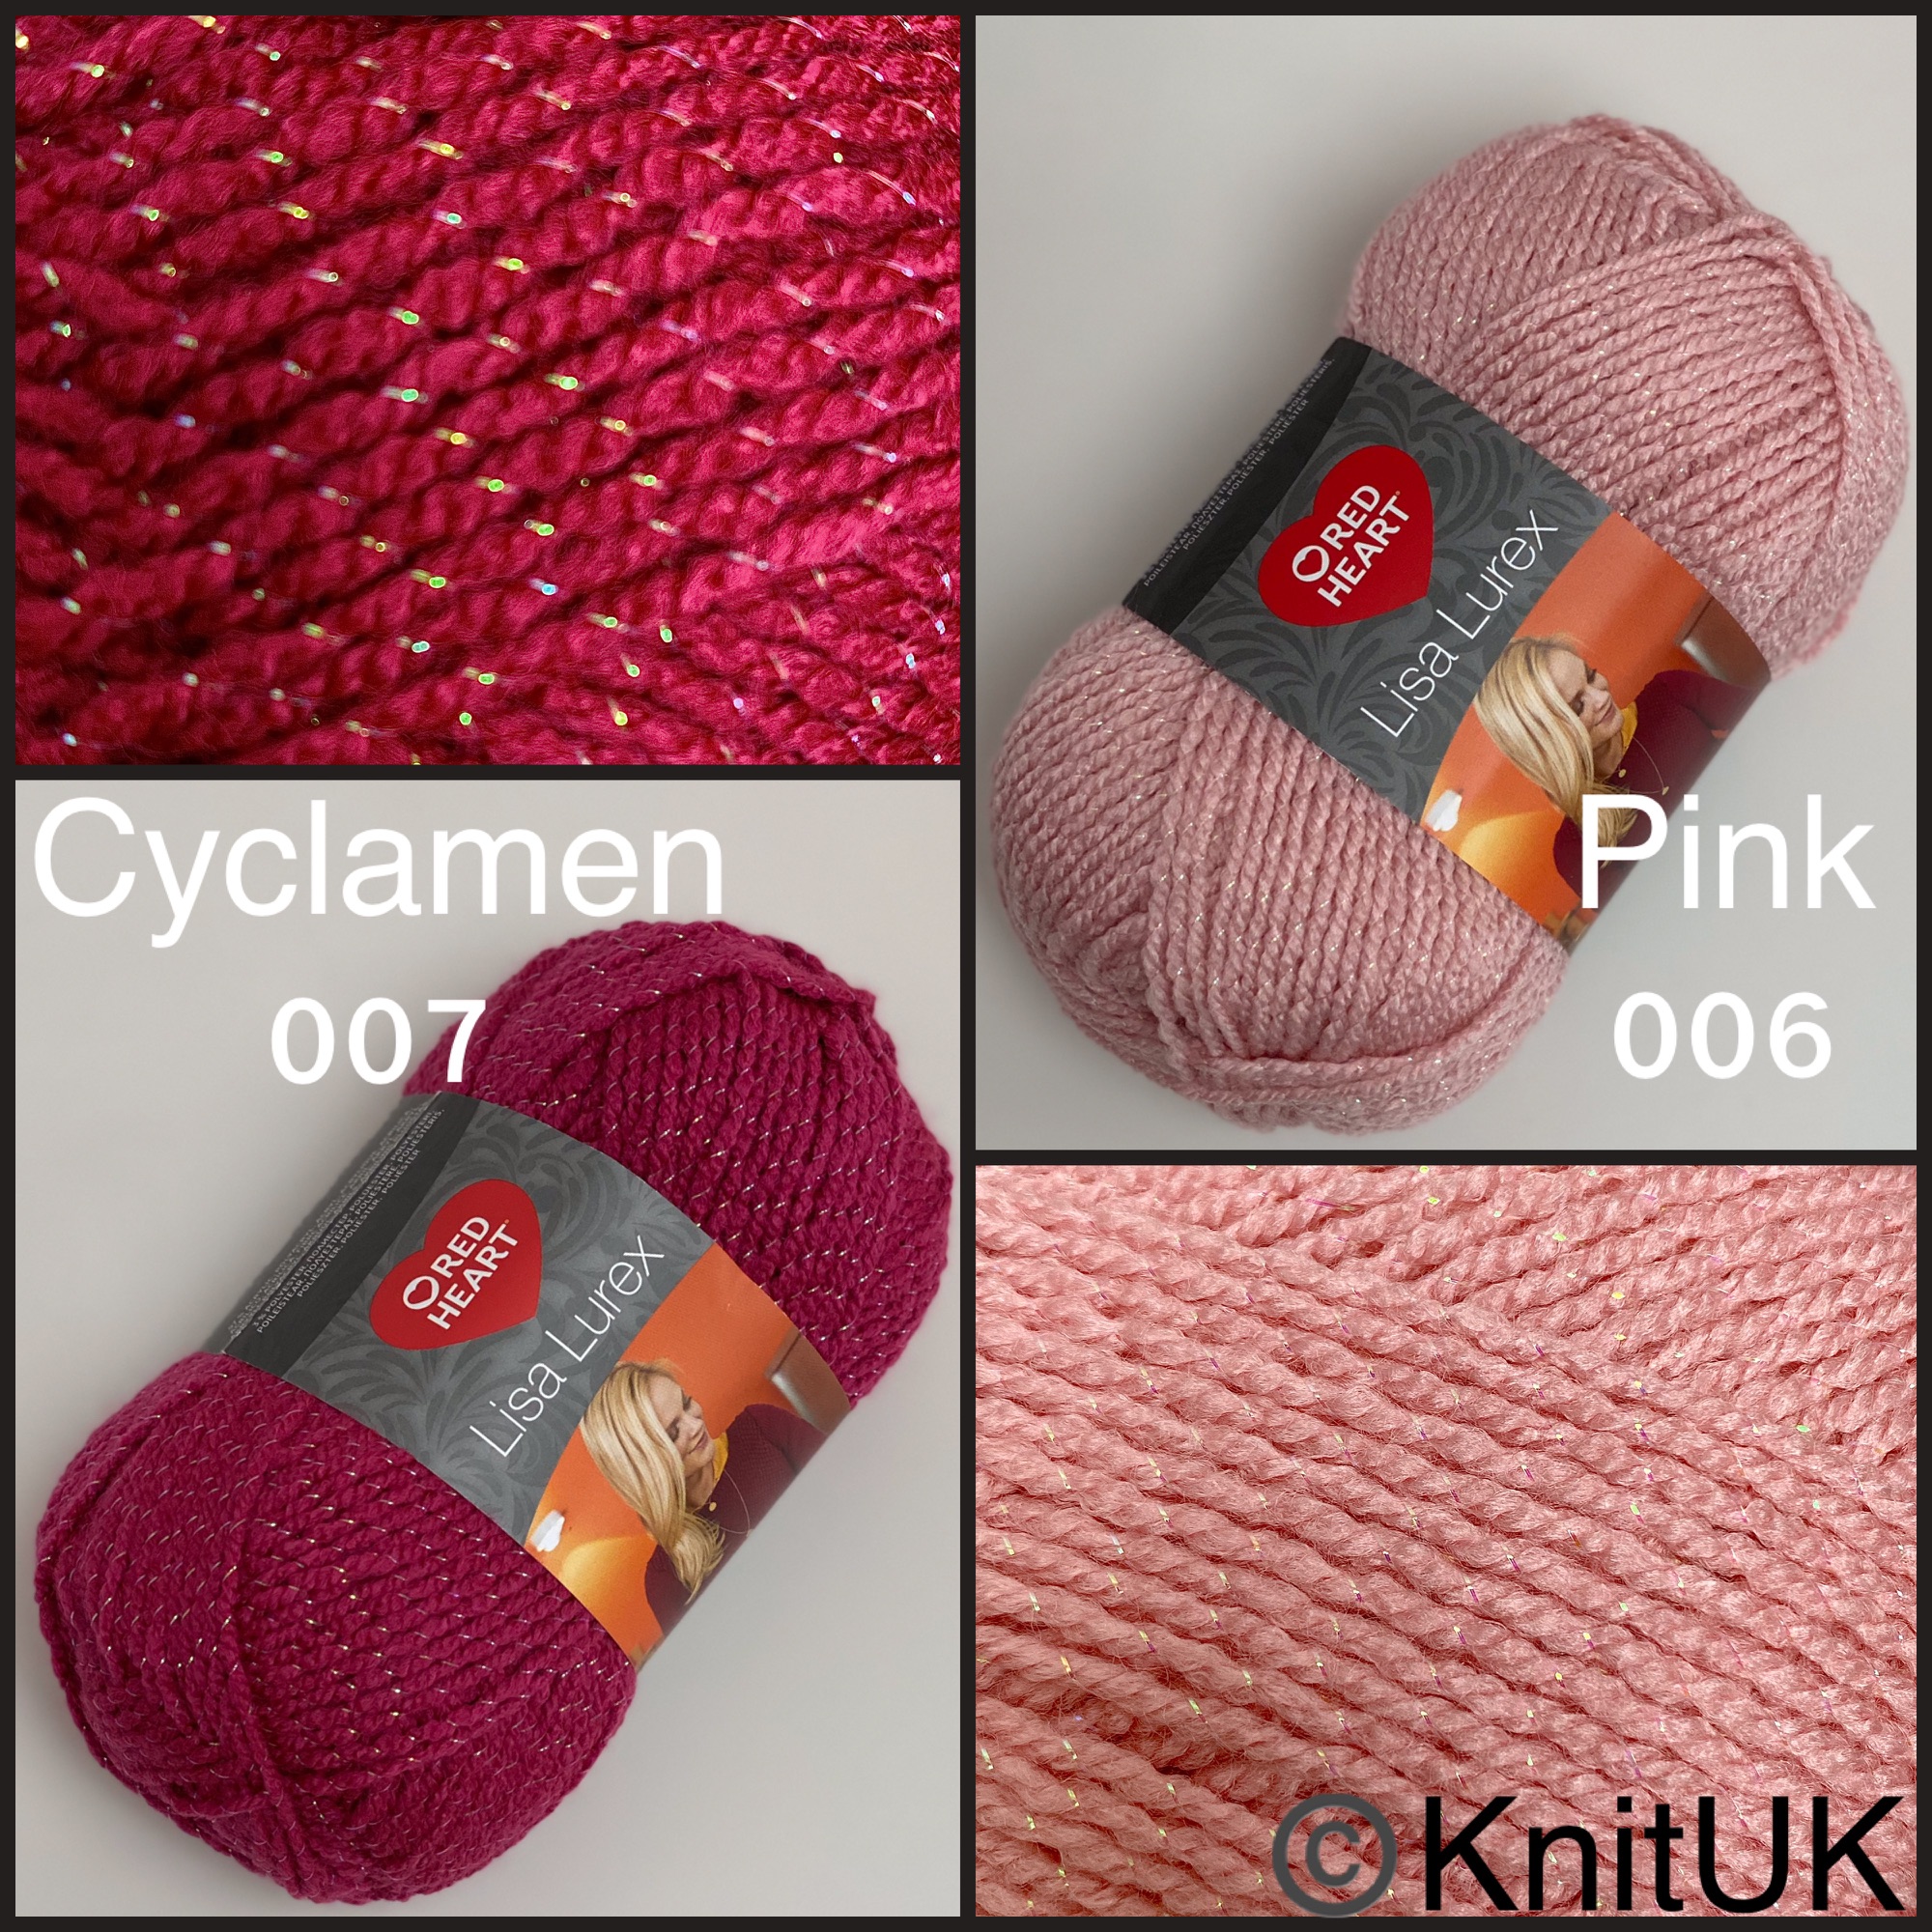 Red heart lisa lurex dk fashion knitting yarn balls pink cyclamen